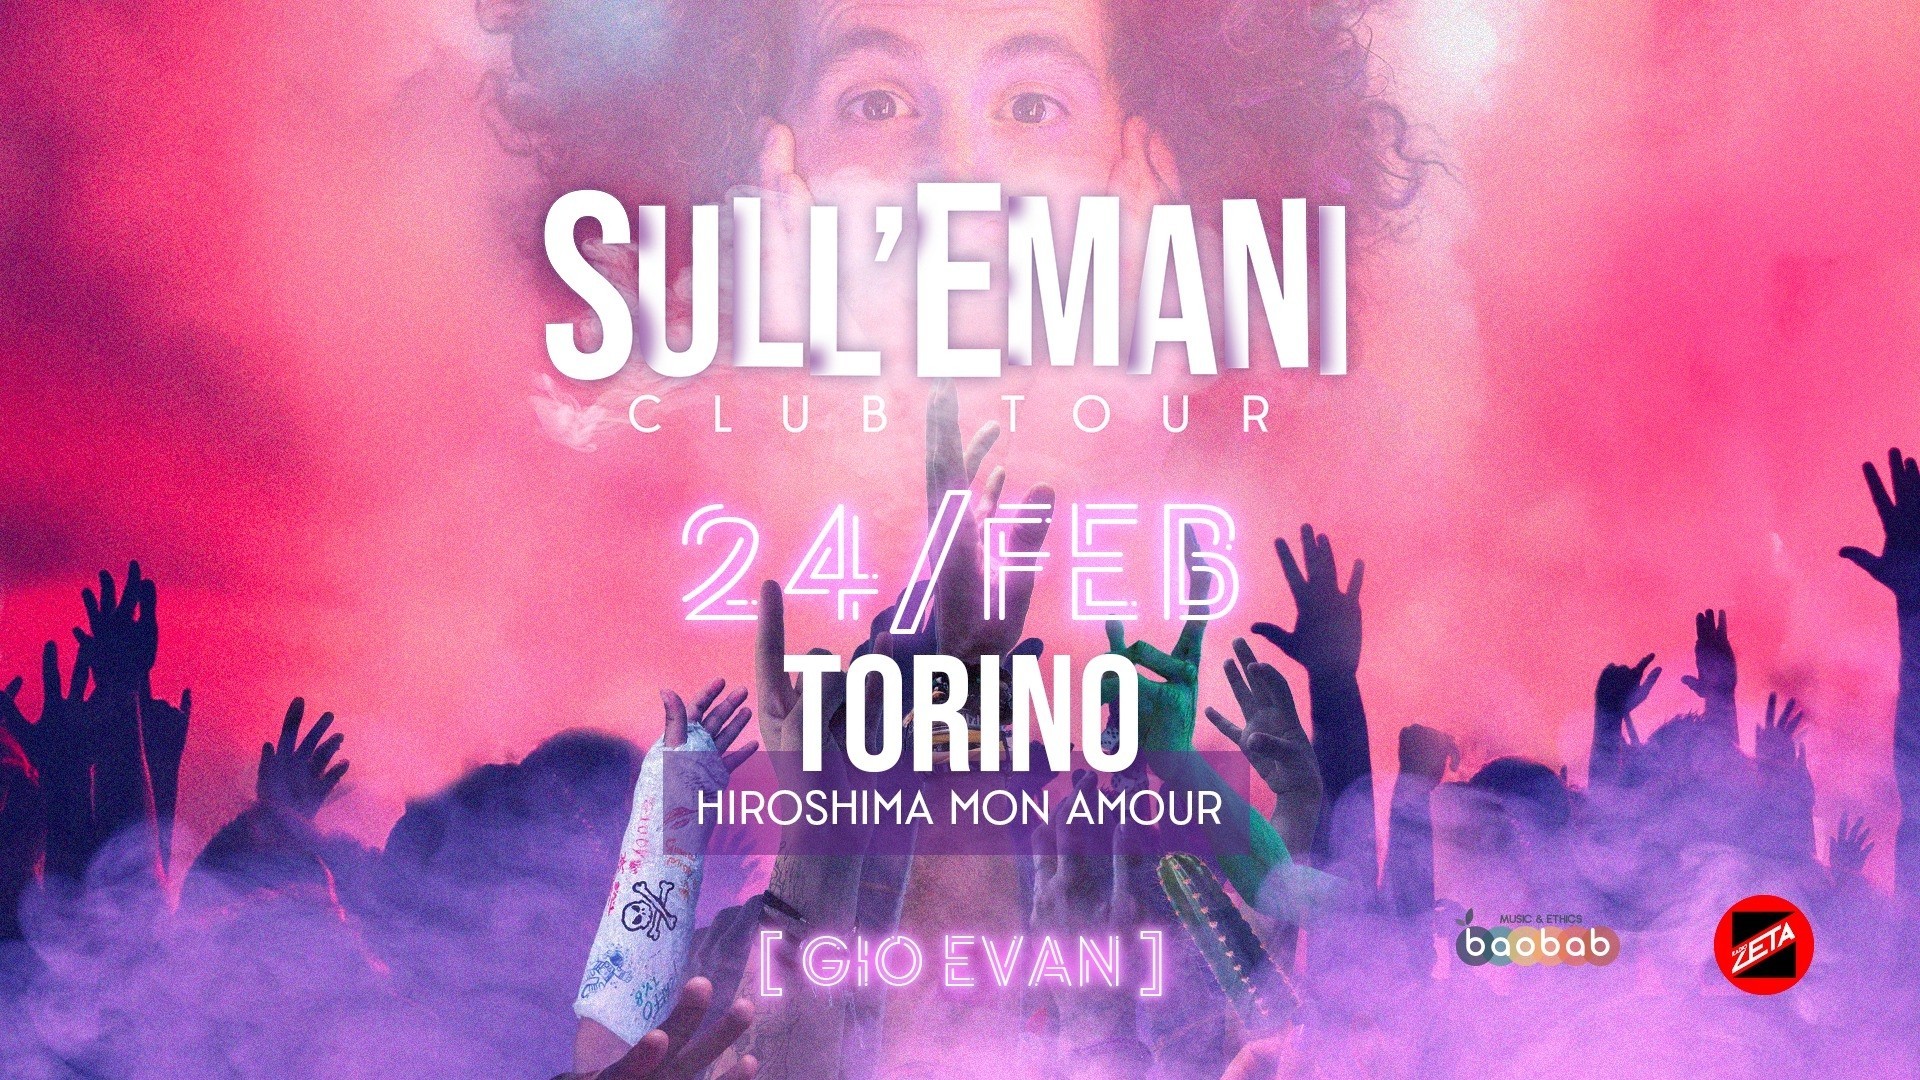 Gio Evan "Sull'Emani Tour"